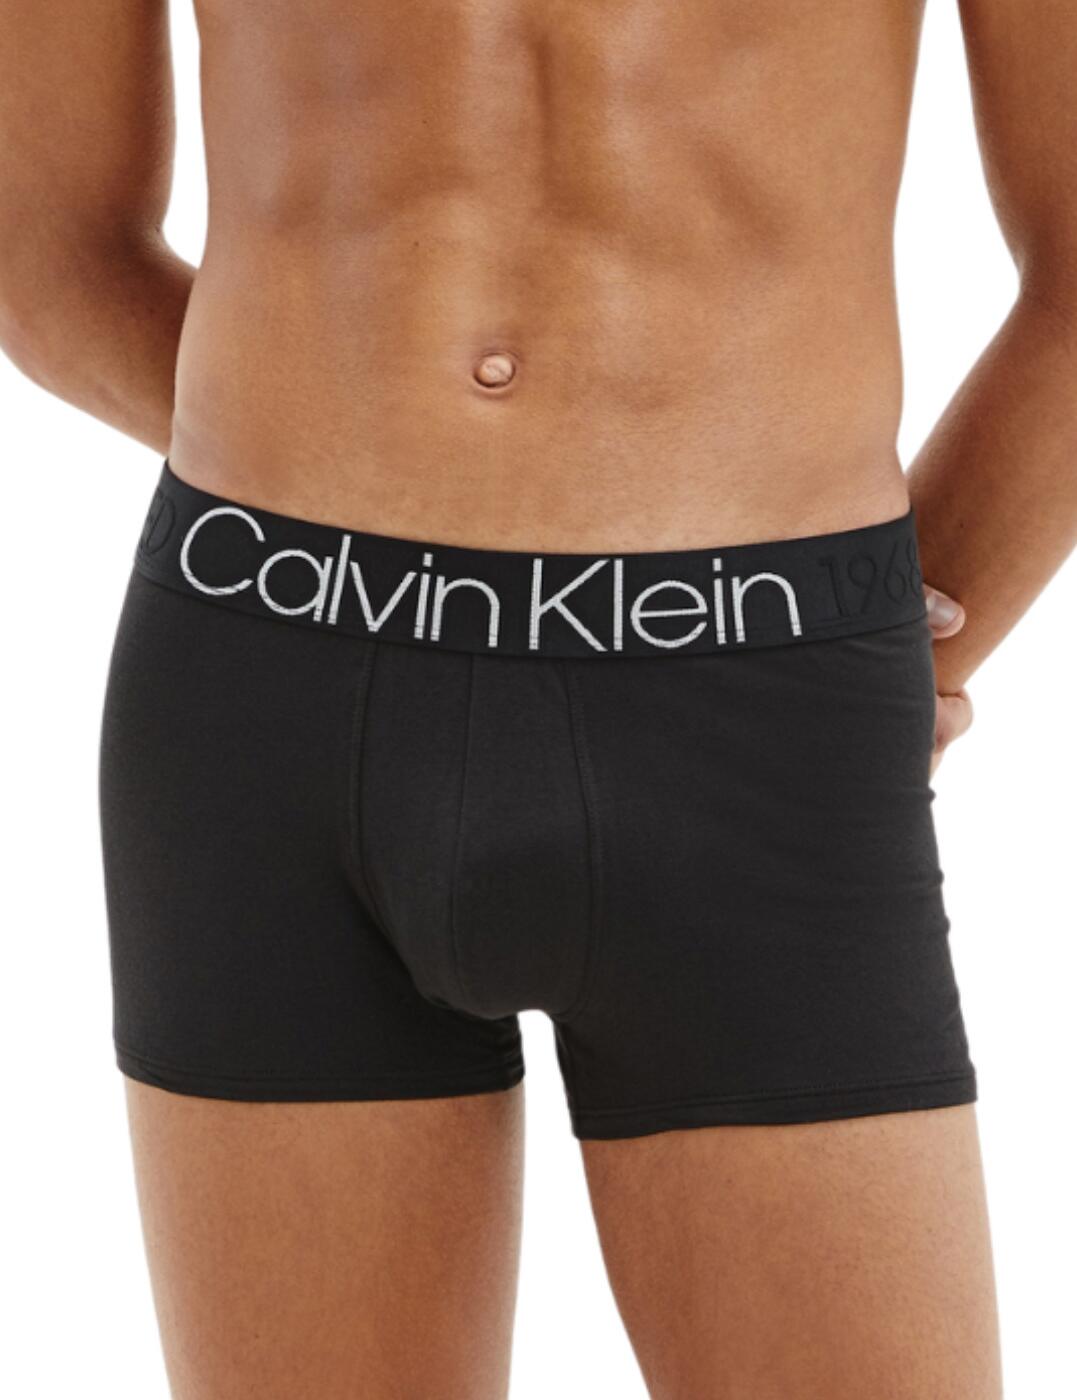 Calvin Klein Mens Evolution Cotton Trunks Black